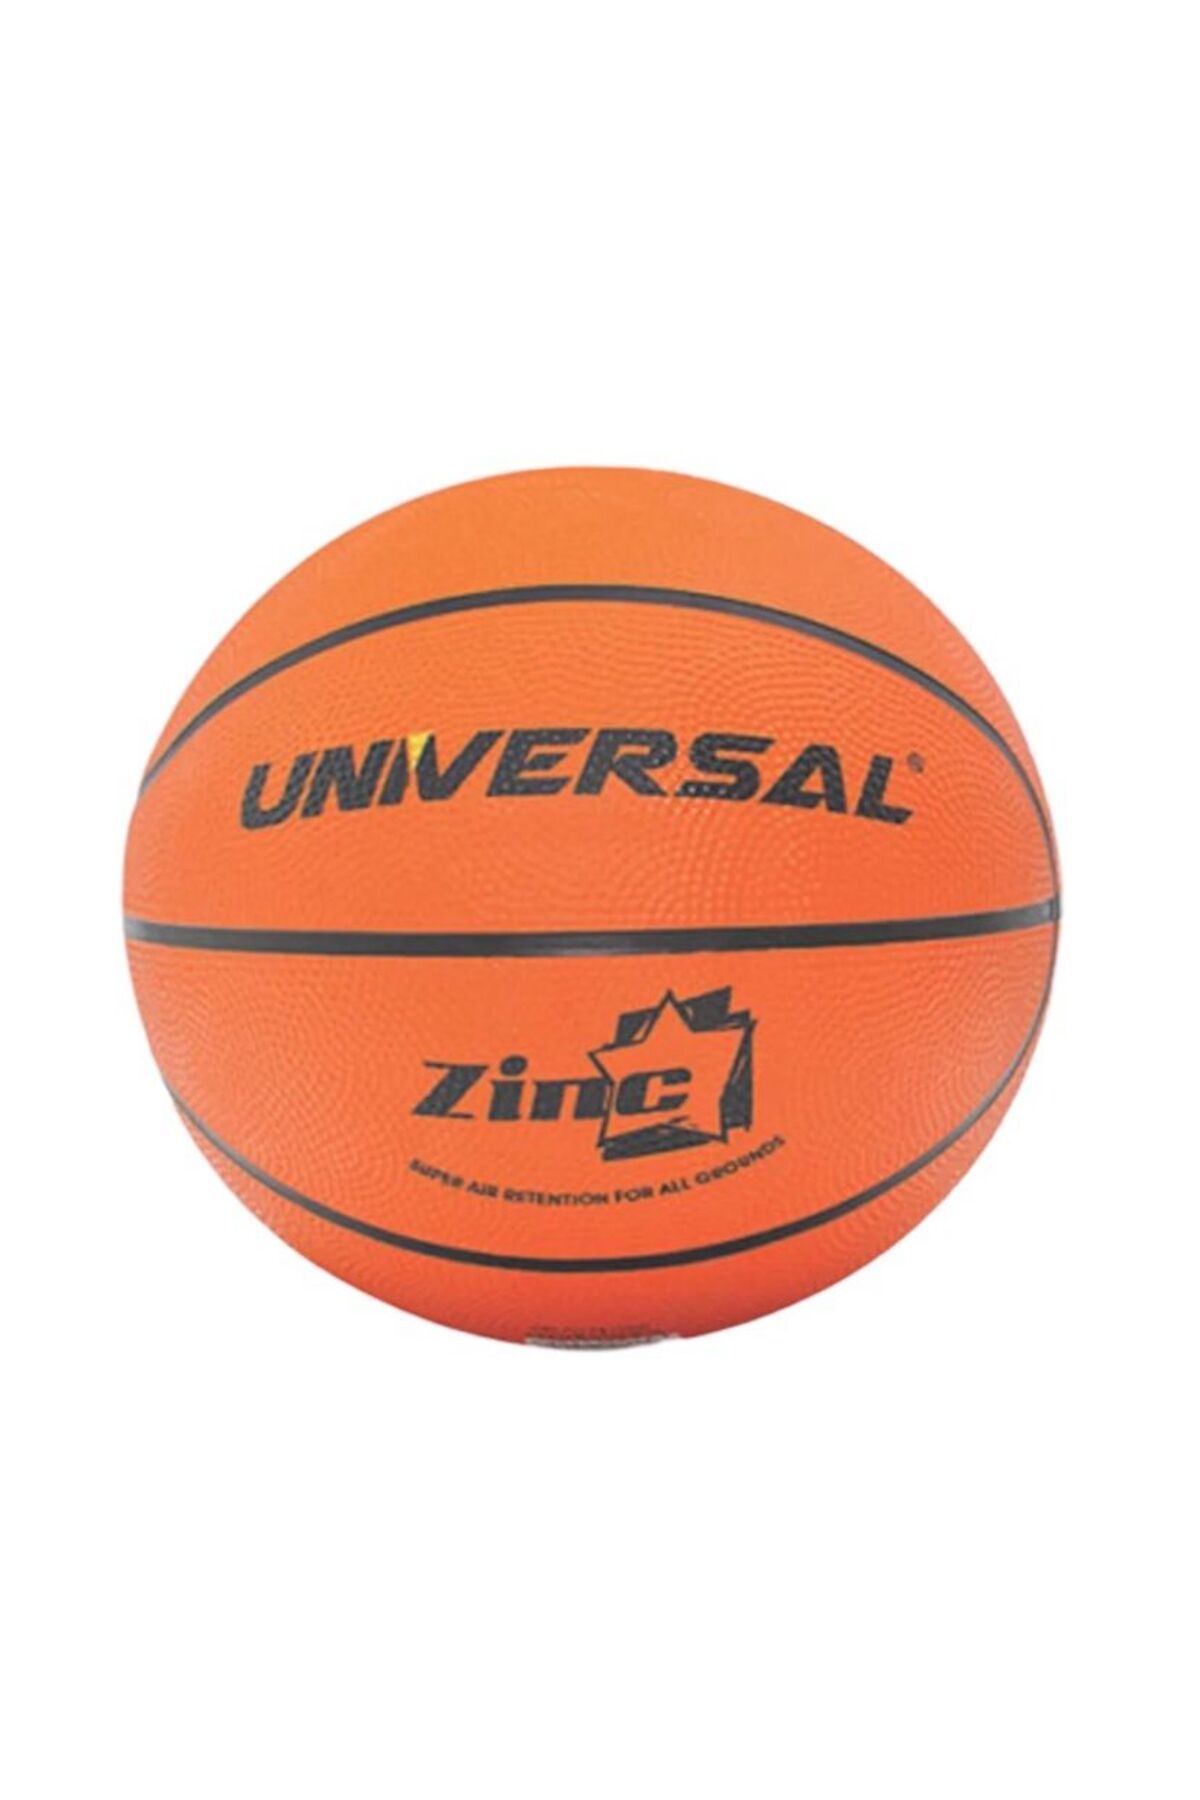 Universal UNİVERSAL Basketbol Topu 7 numara